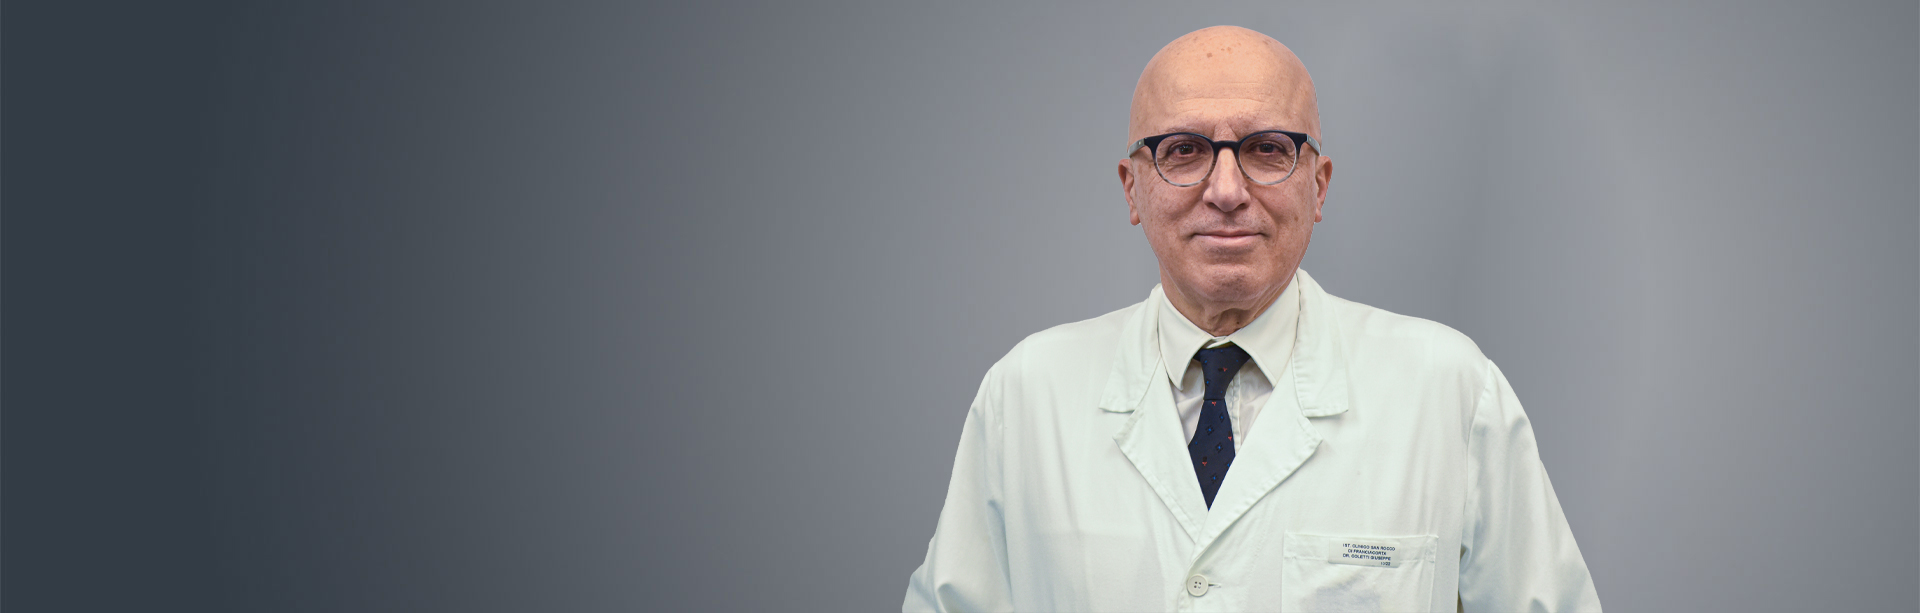 Dr. Giuseppe Coletti